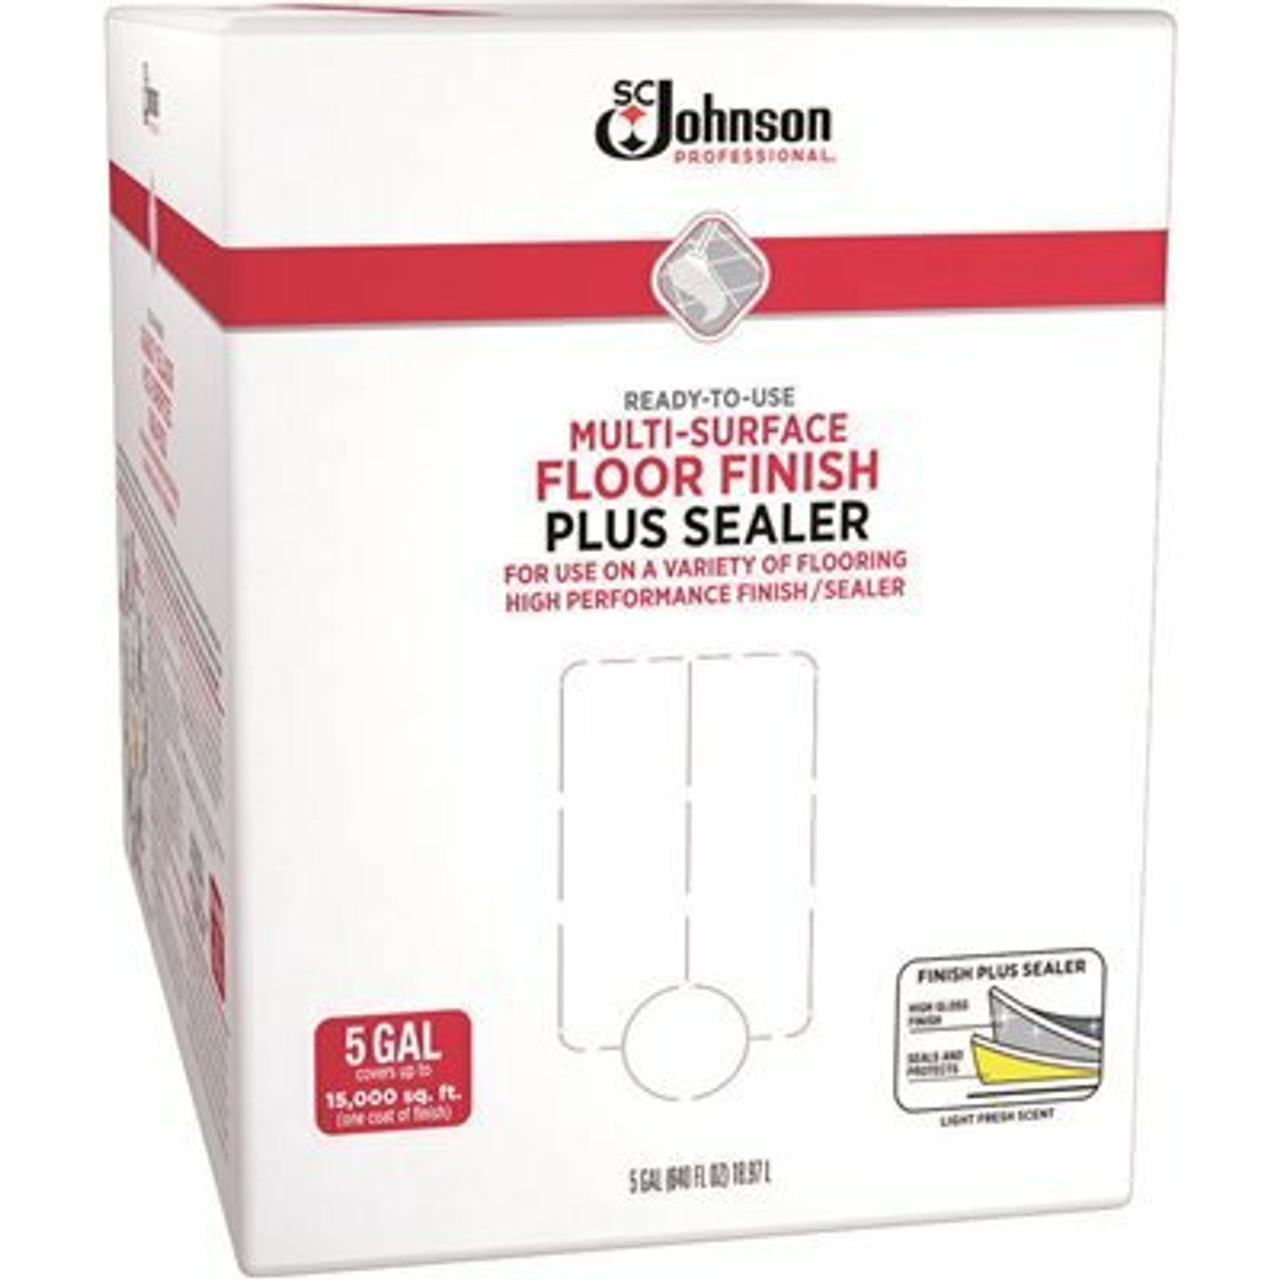 Sc Johnson Professional 5 Gal. Multi-Surface Floor Plus Sealer